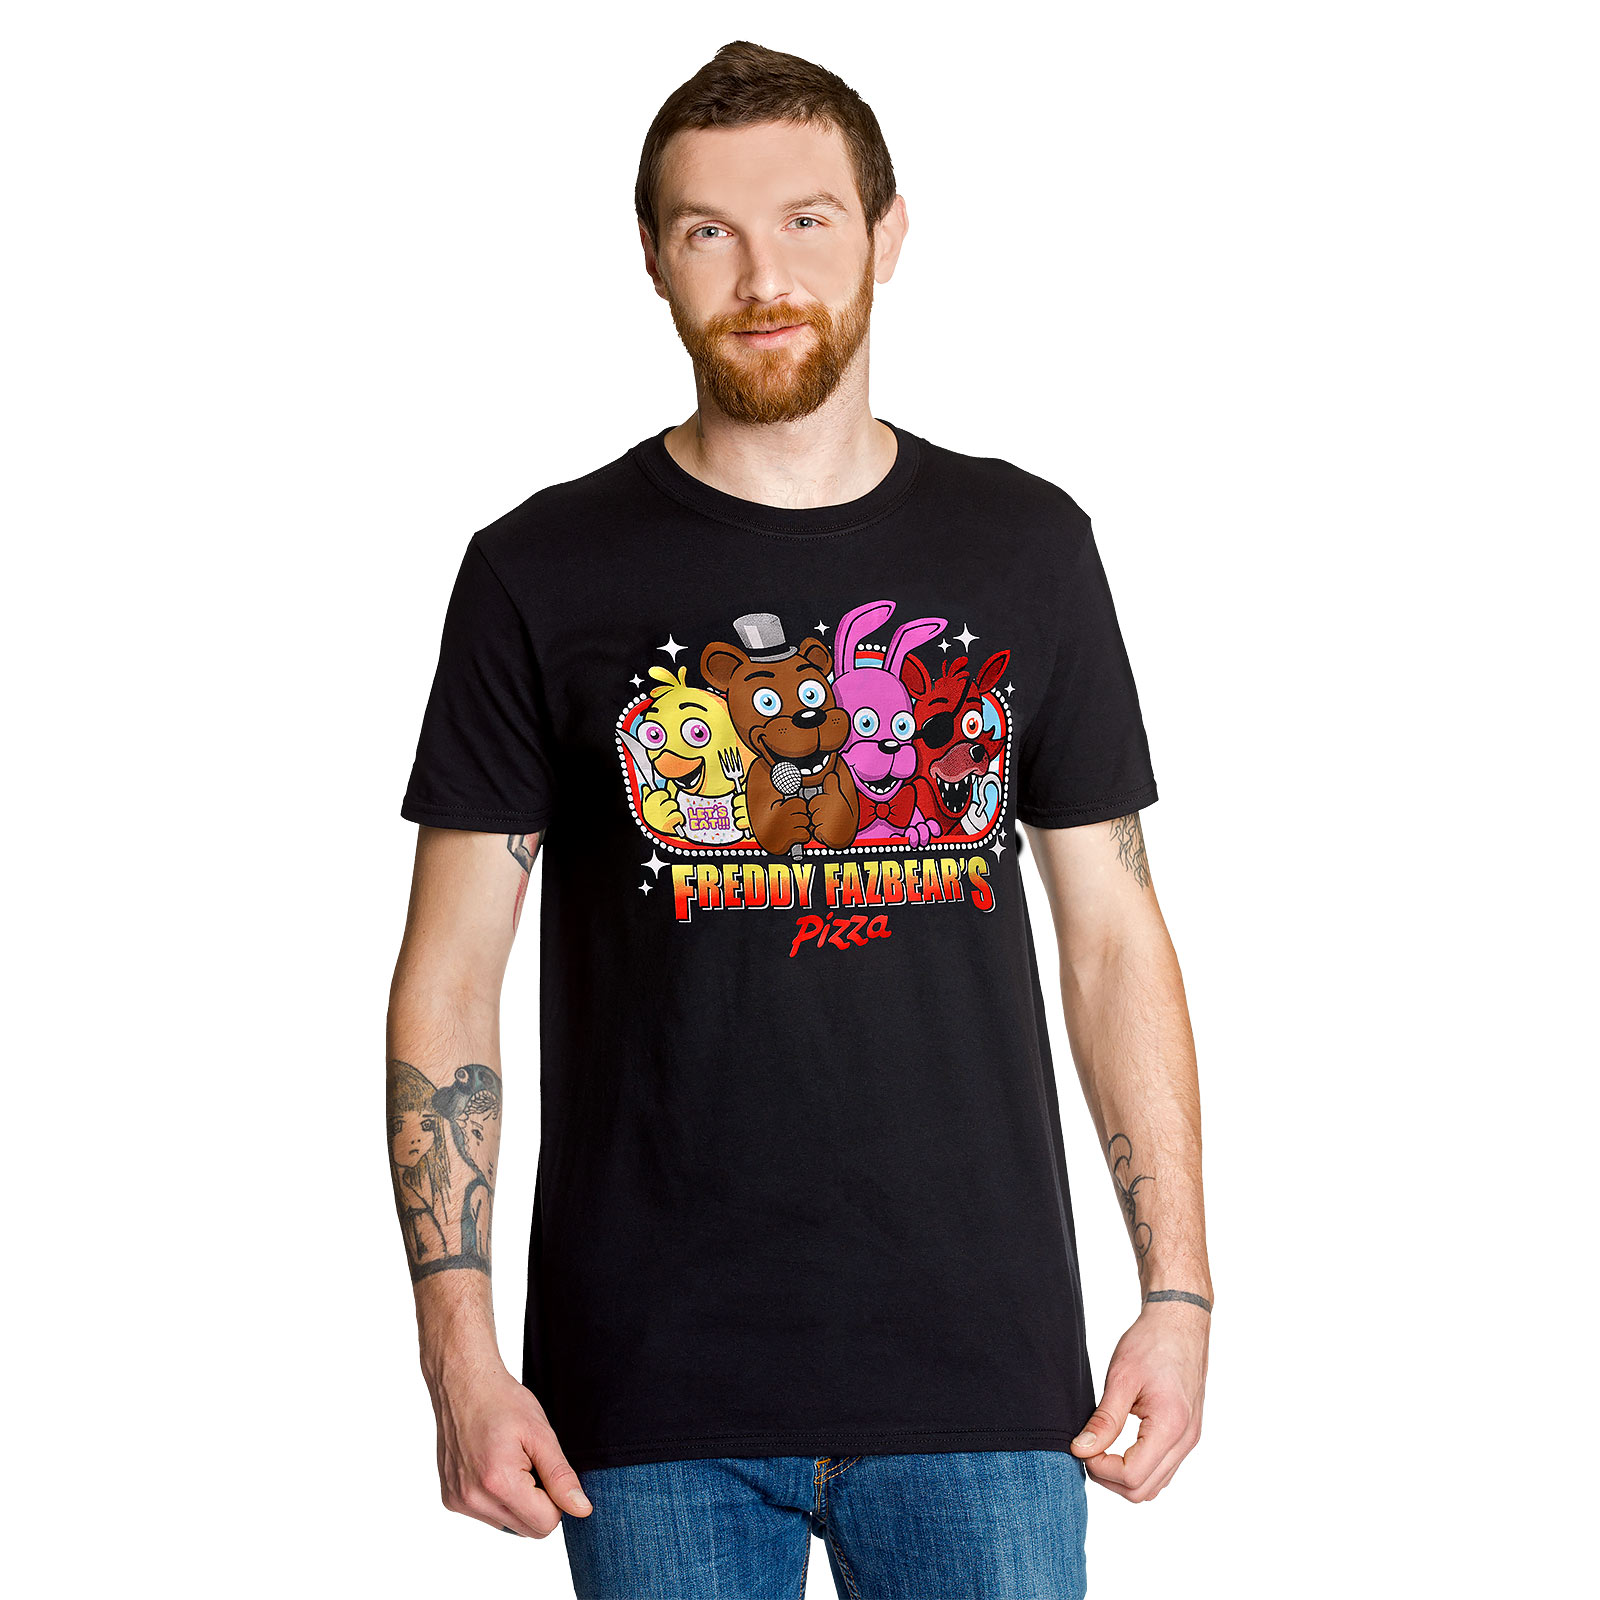 Five Nights at Freddy's - Freddy Fazbear's Pizza T-shirt